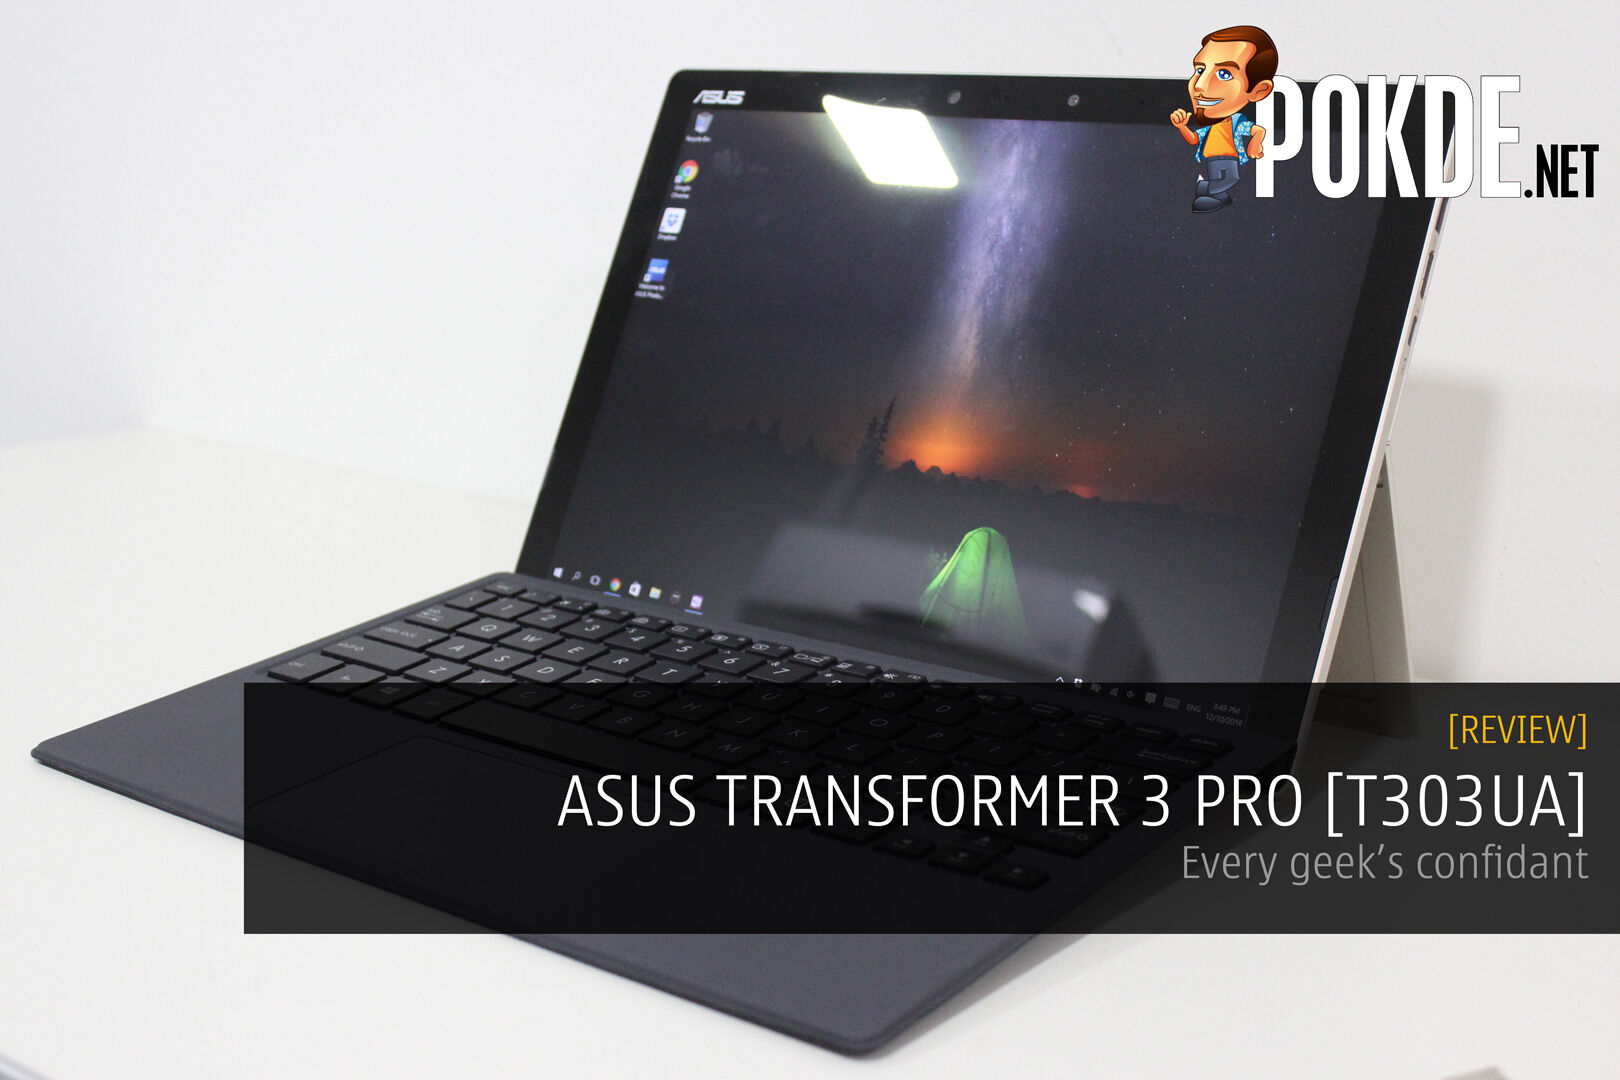 Asus Transformer 3 Pro review [T303UA] - Every geeks confidant 27